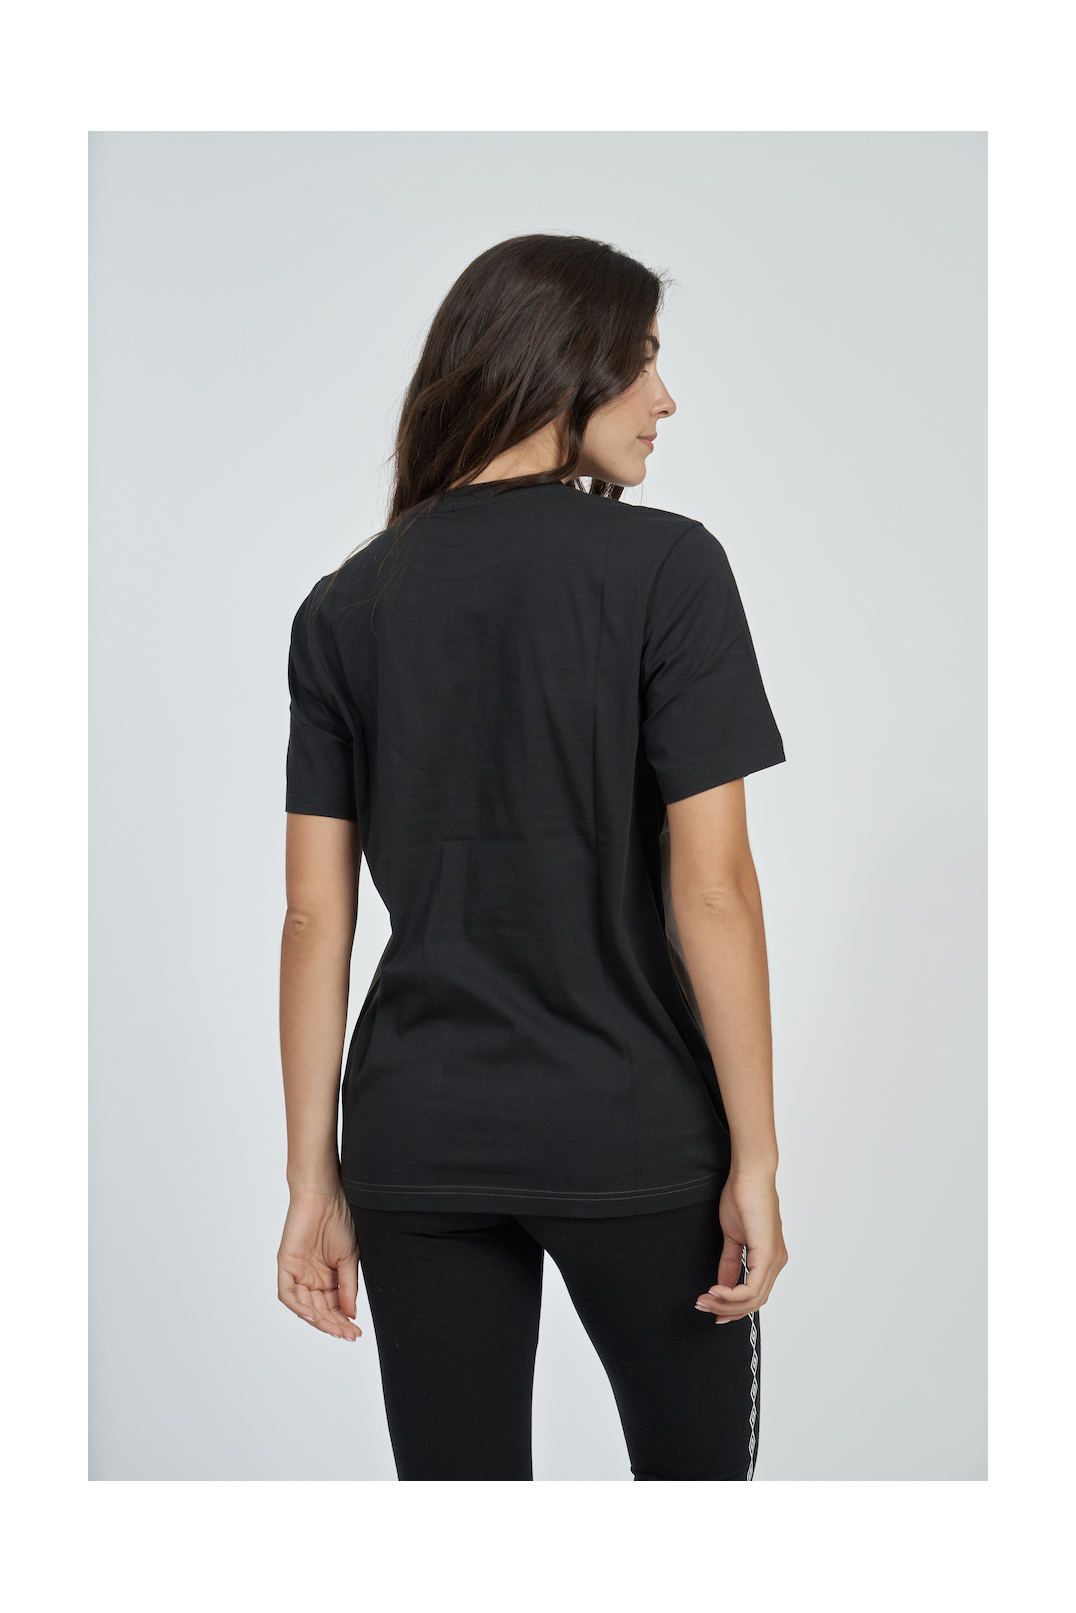 Camiseta Umbro FW Sportswear T-Shirt Black / Gunmetal / Brilliant